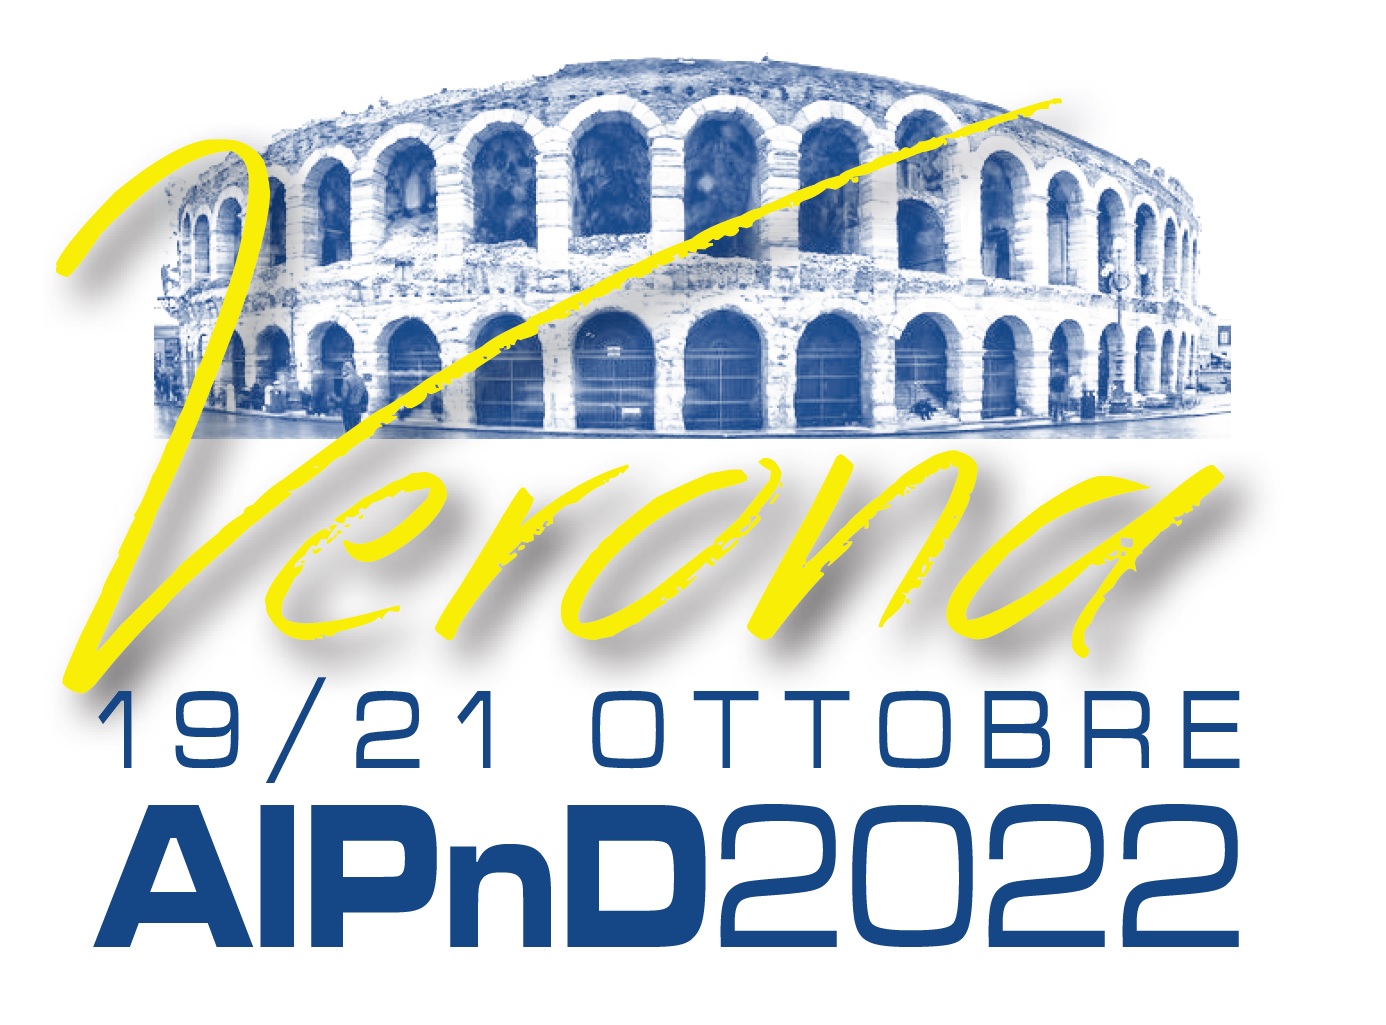 AIPnD 2022 – 19/21 OTTOBRE, PALAEXPO, Veronafiere